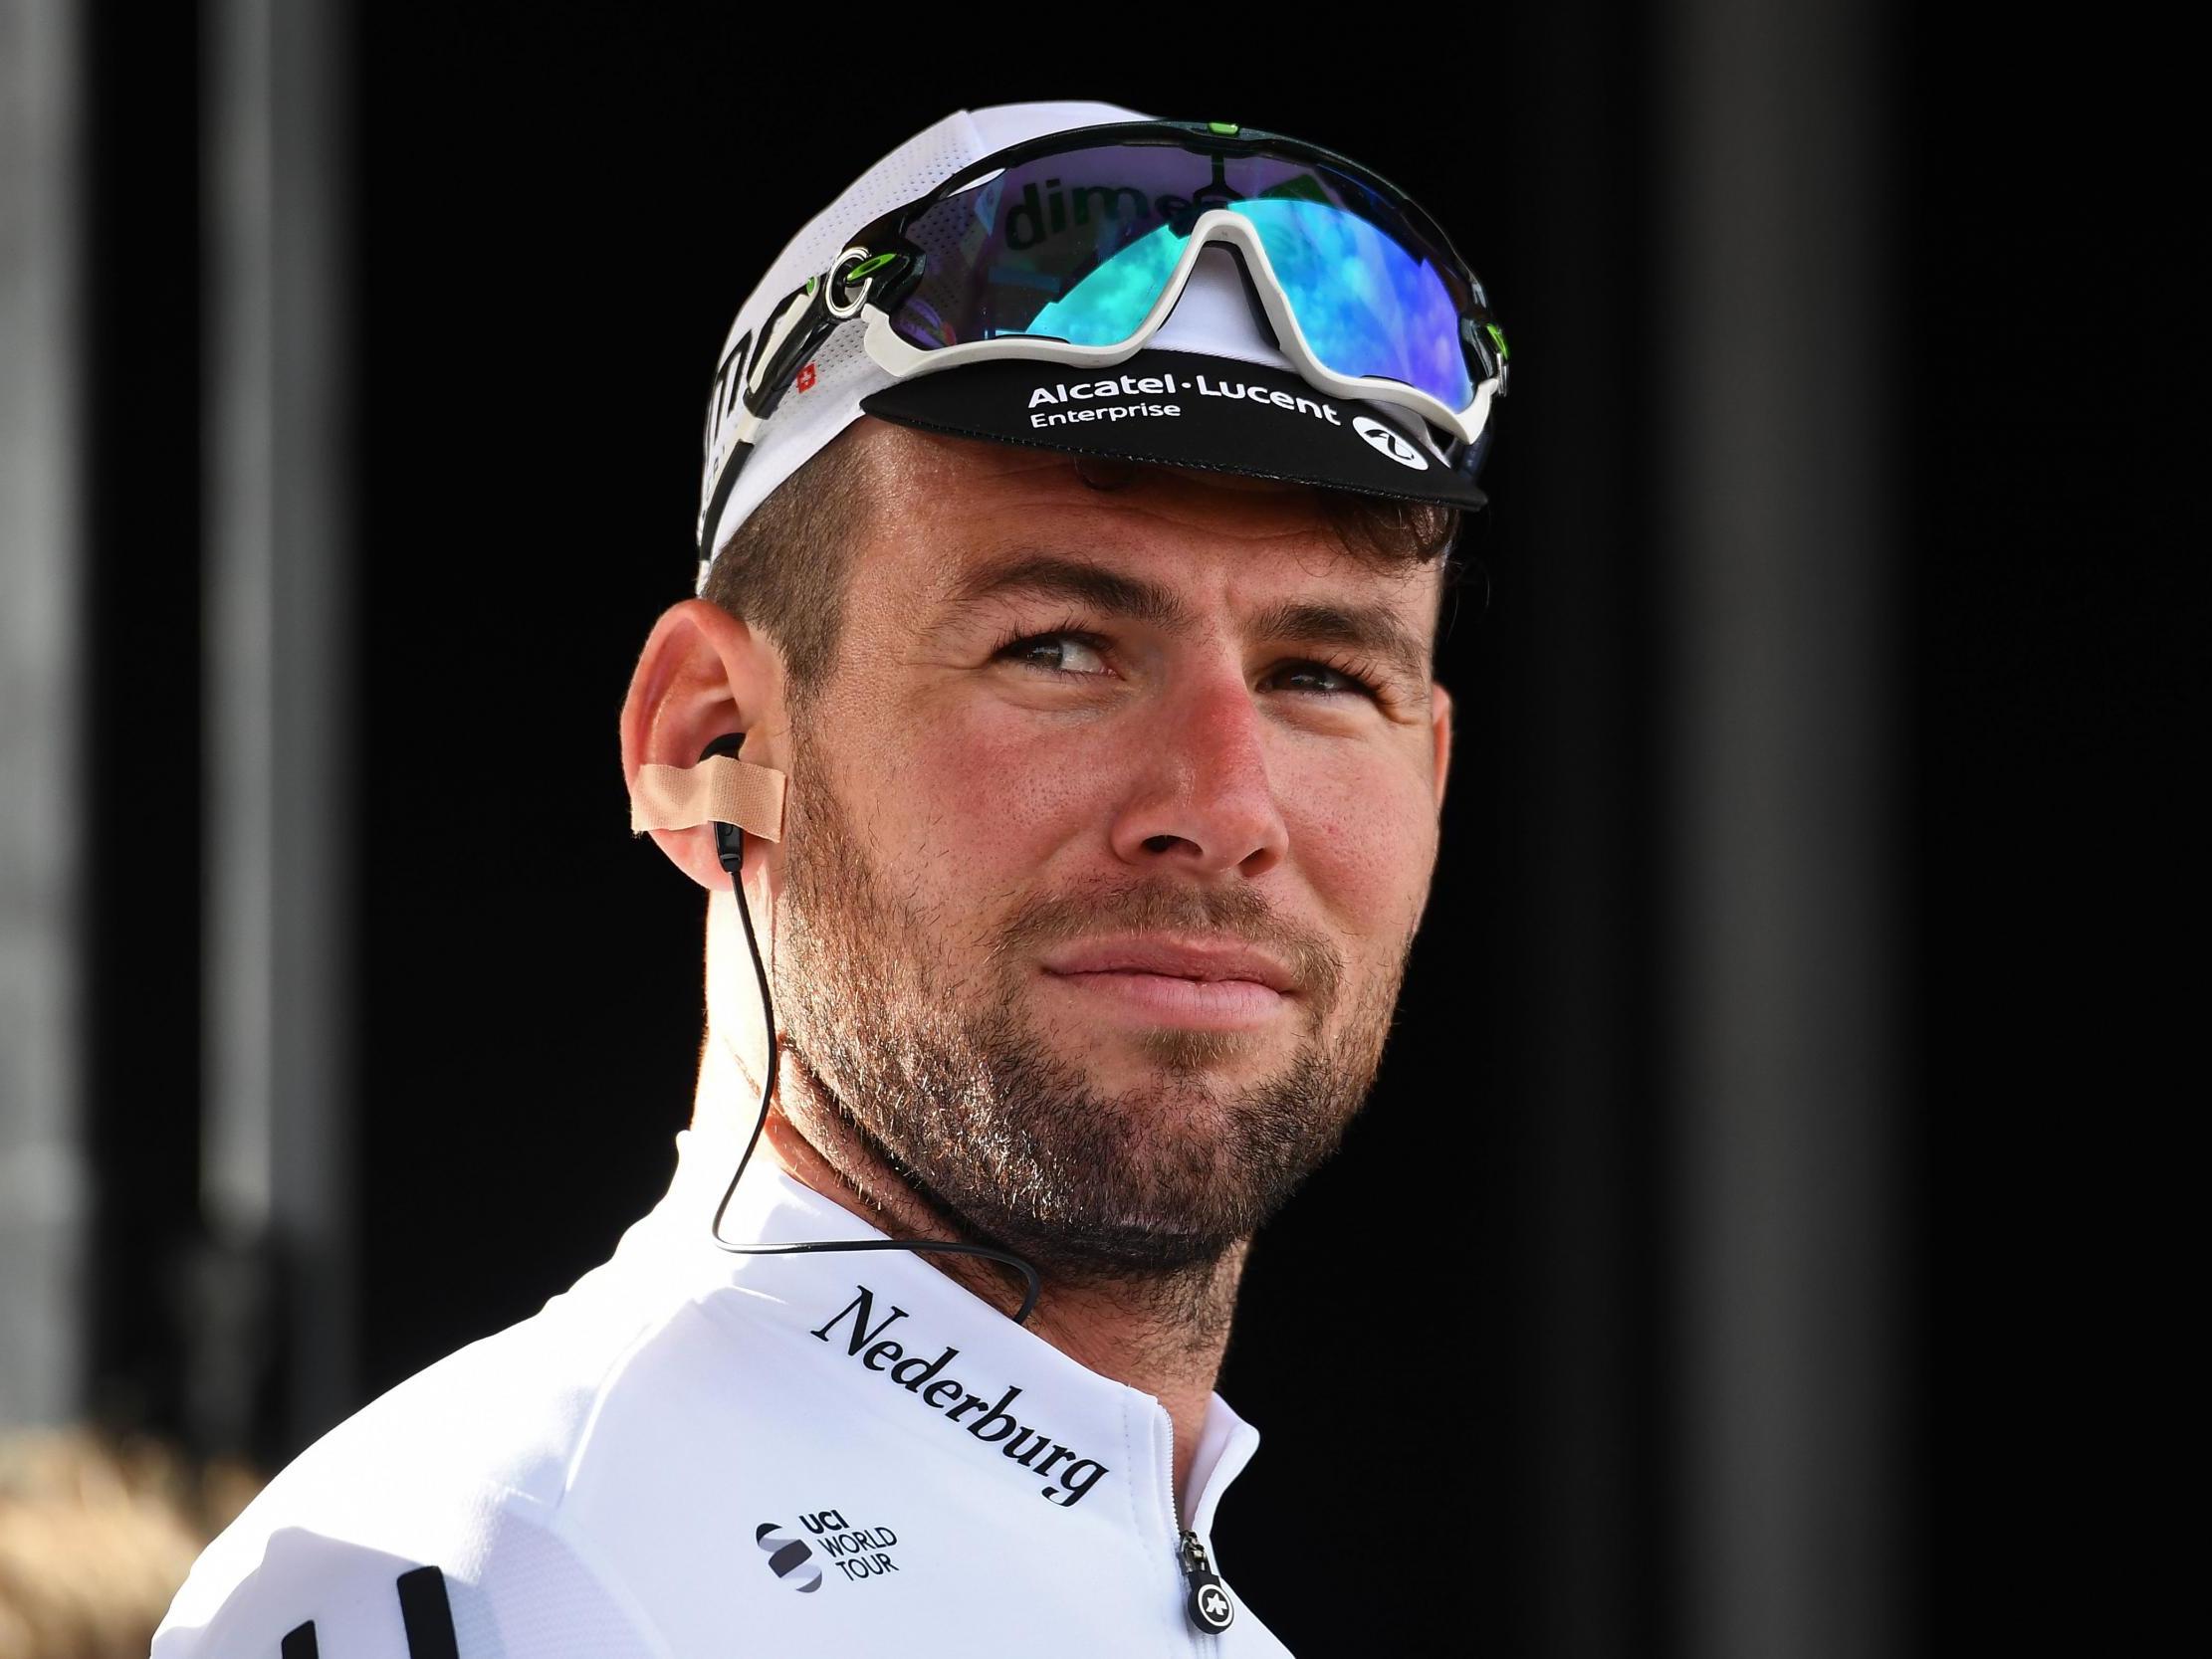 Mark Cavendish will miss the Tour de France